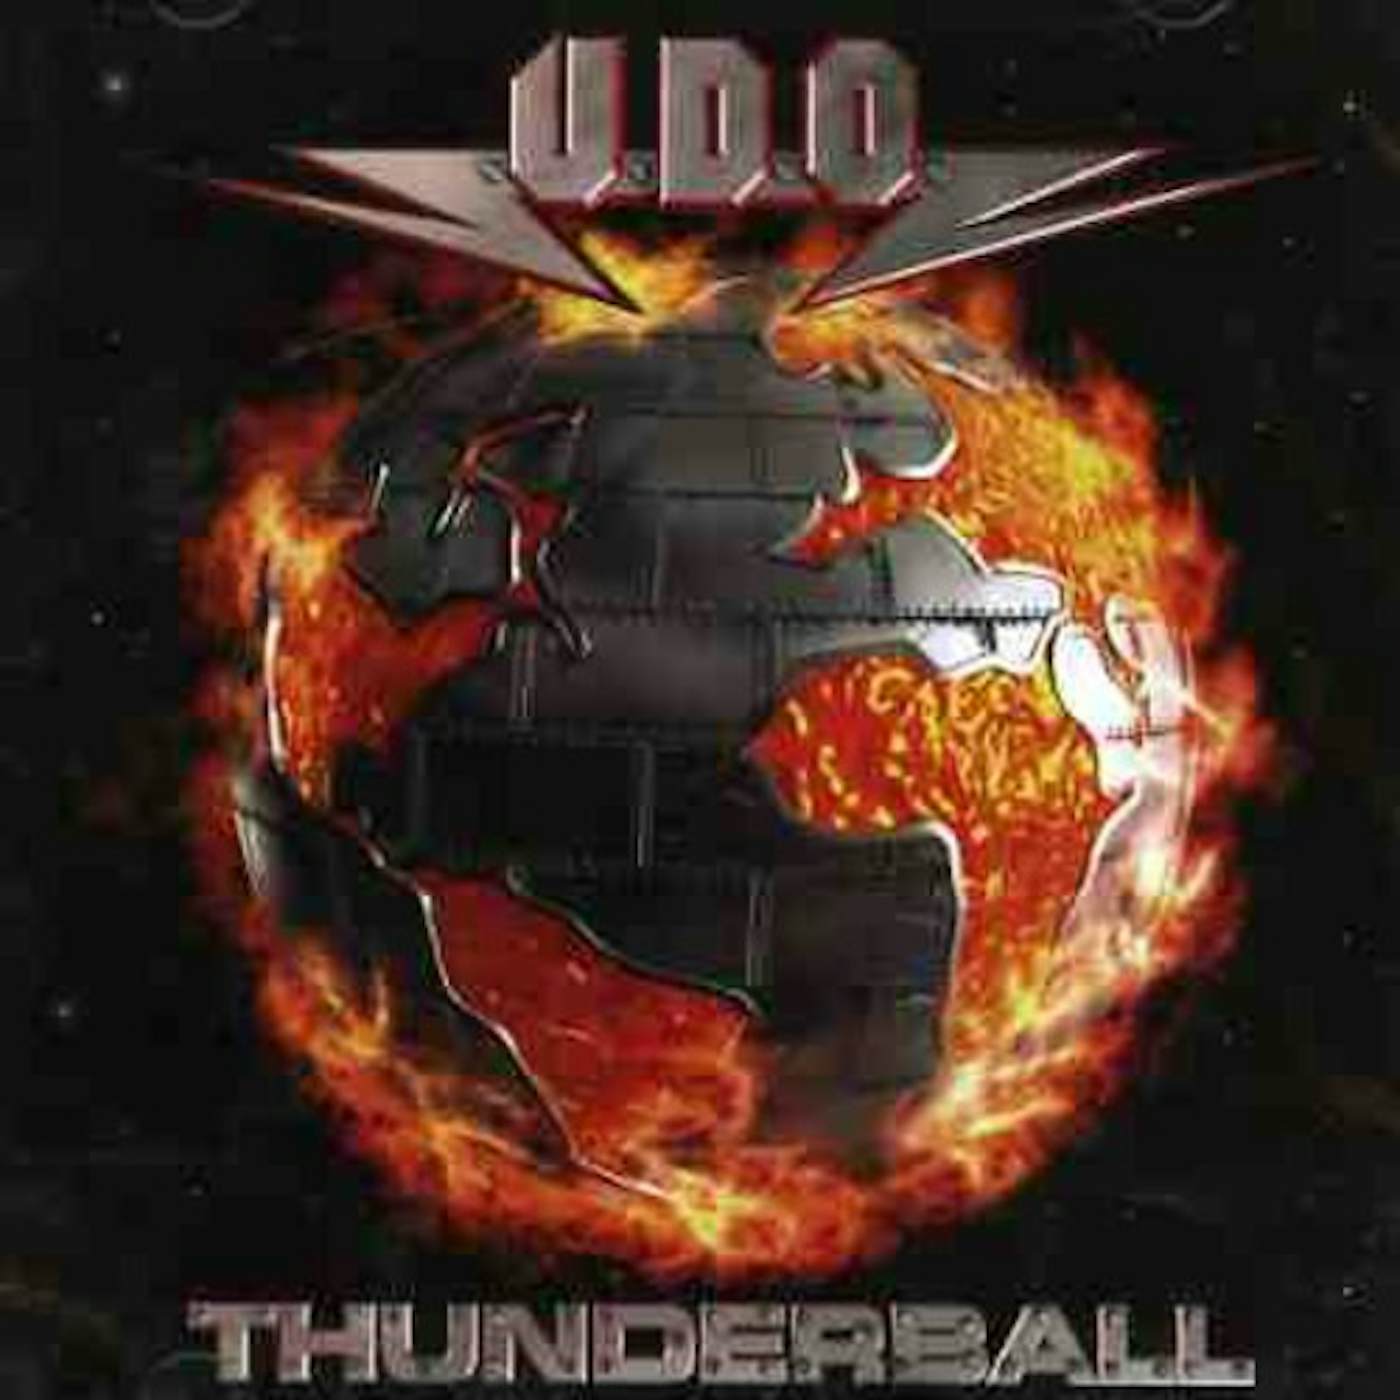 U.D.O. THUNDERBALL CD